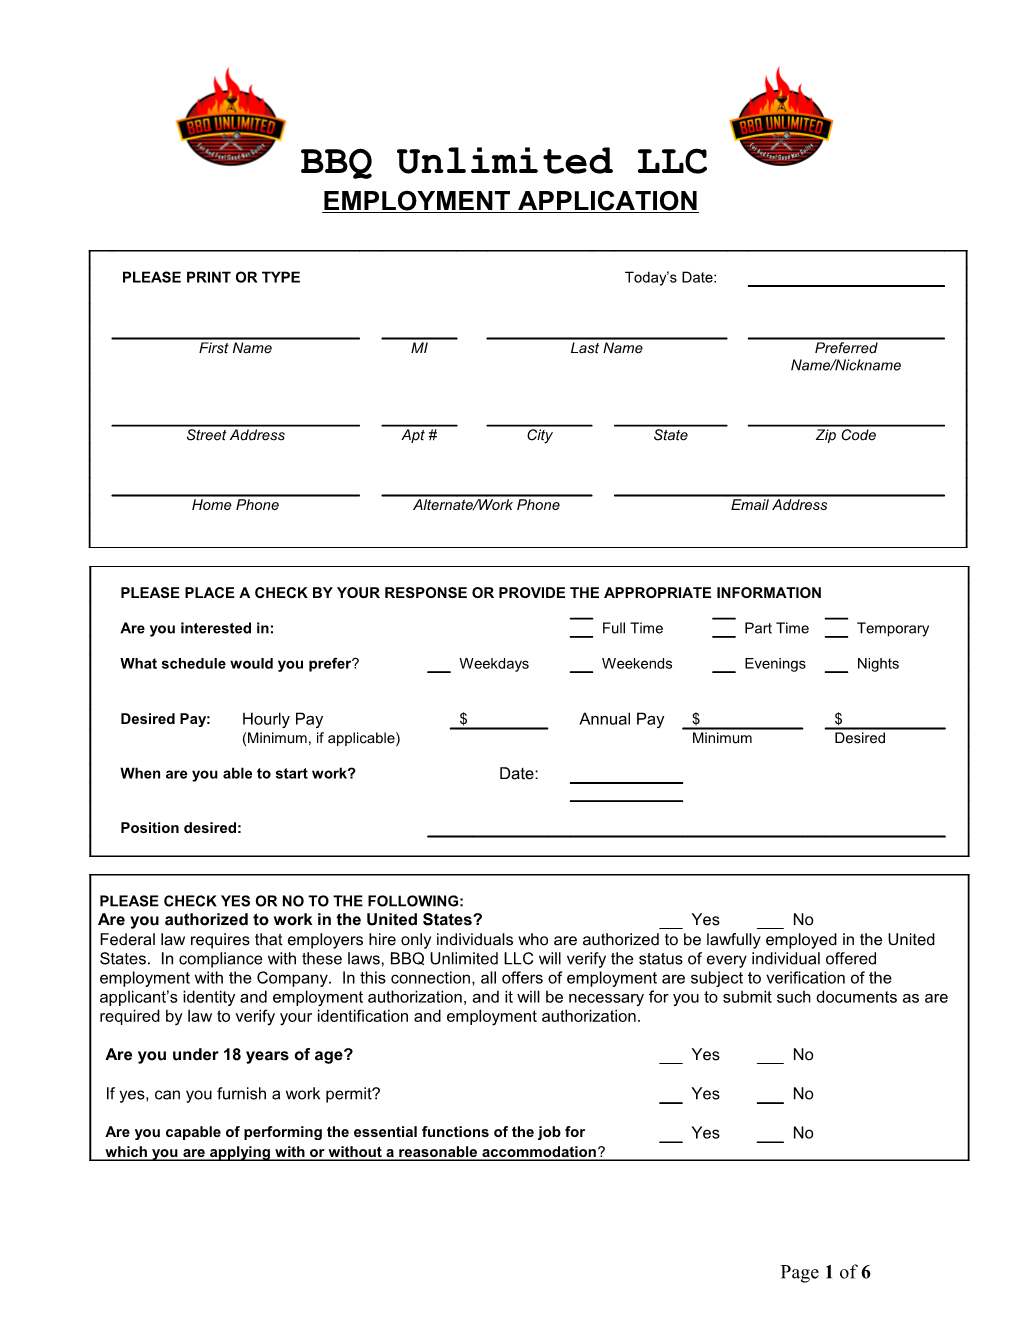 Employment Application s11